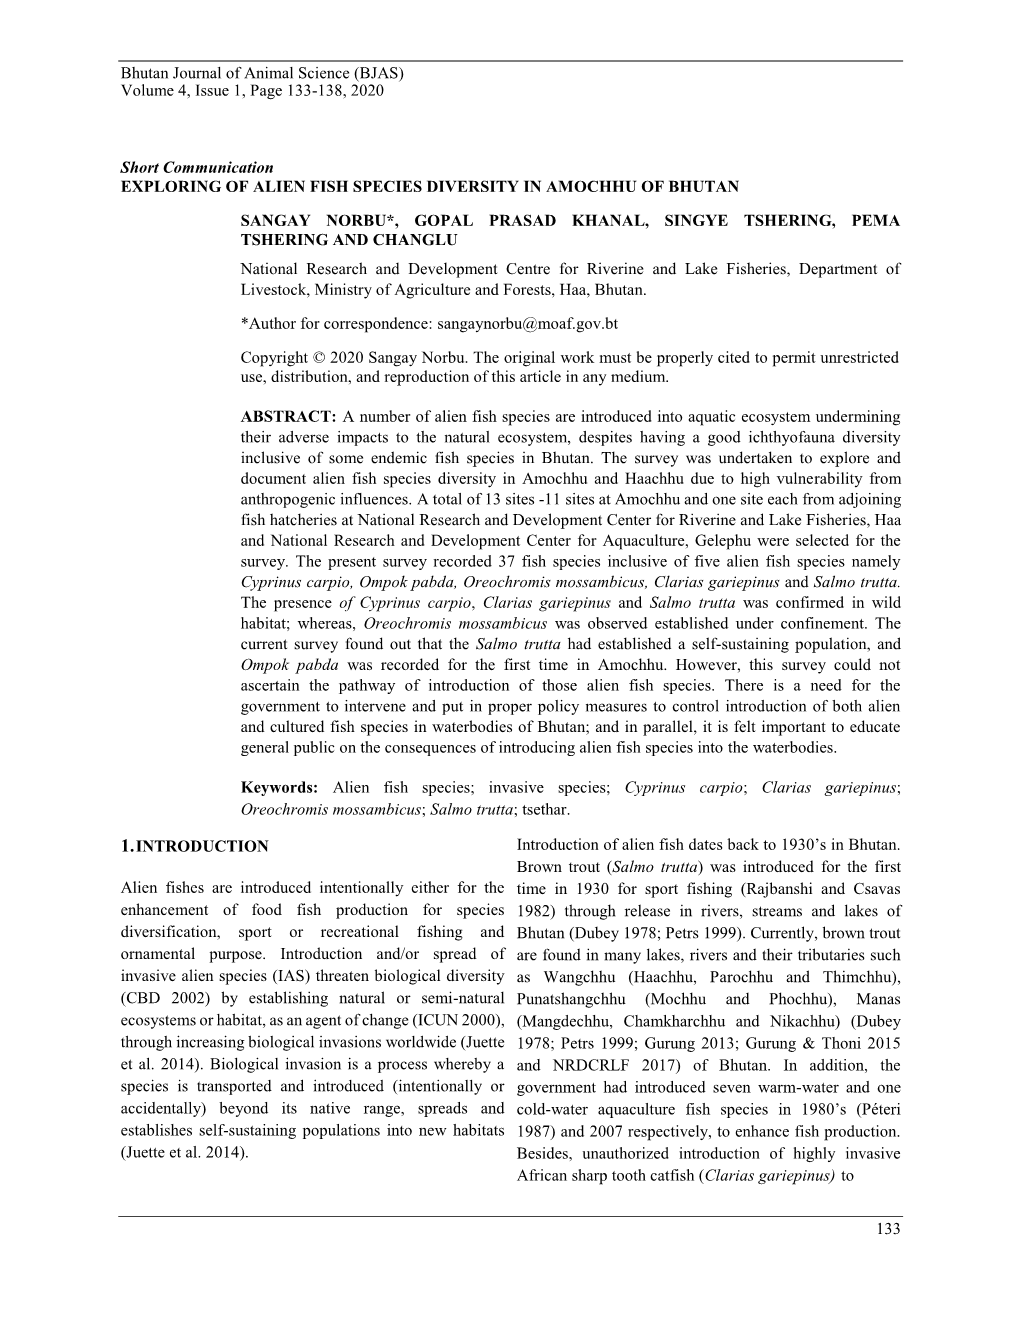 Bhutan Journal of Animal Science (BJAS) 133 Volume 4, Issue 1